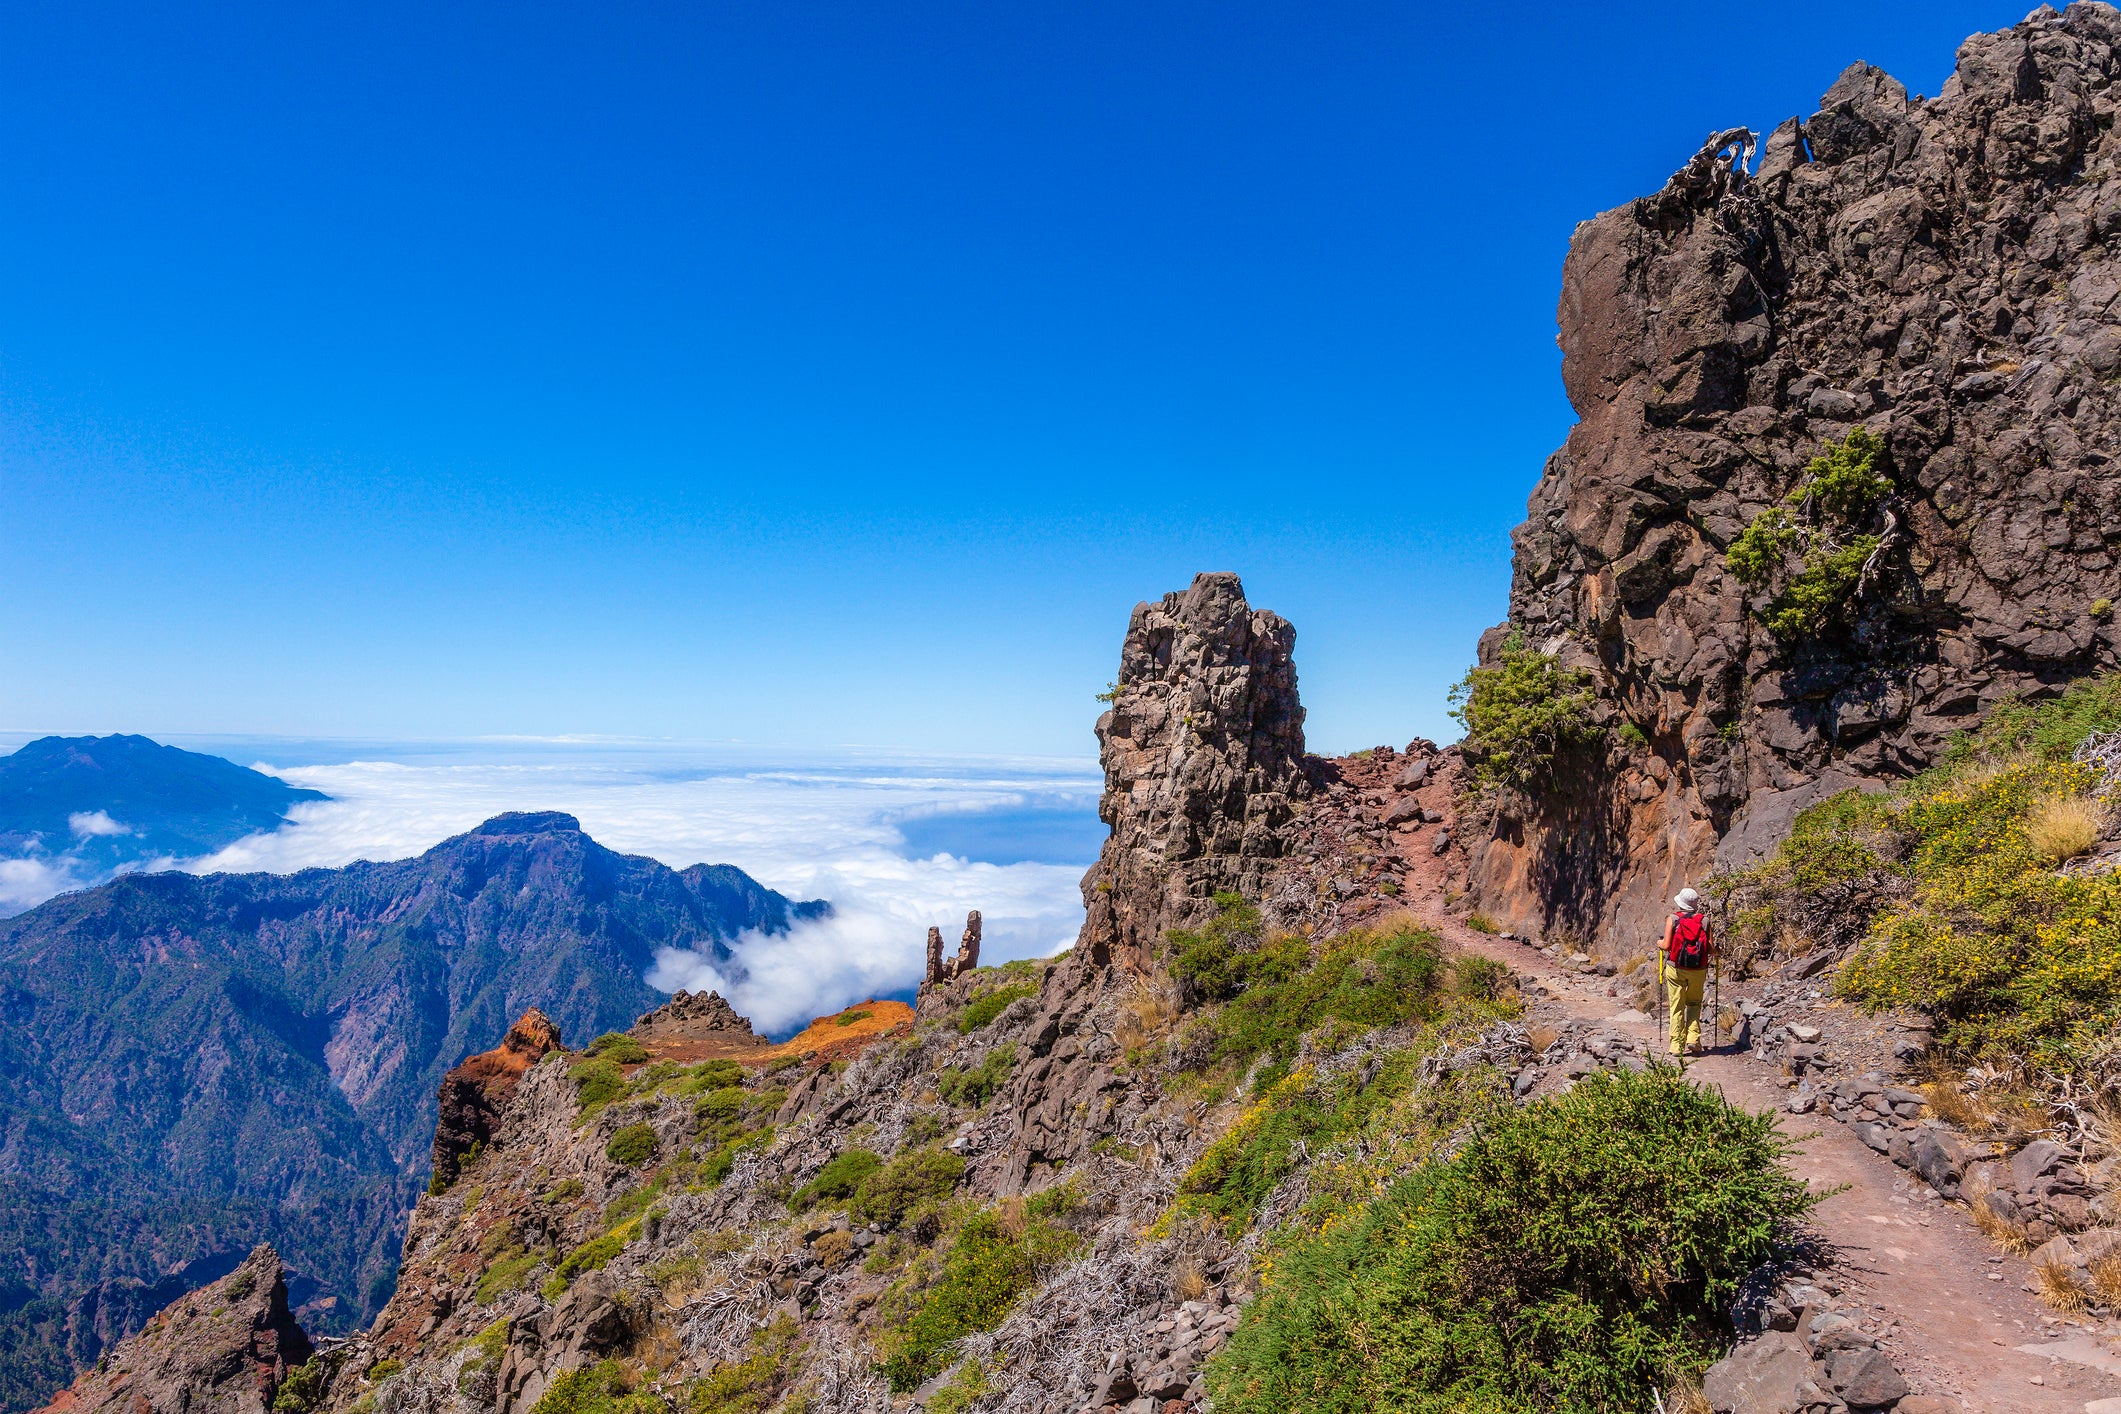 La Palma is popular destination for hiking